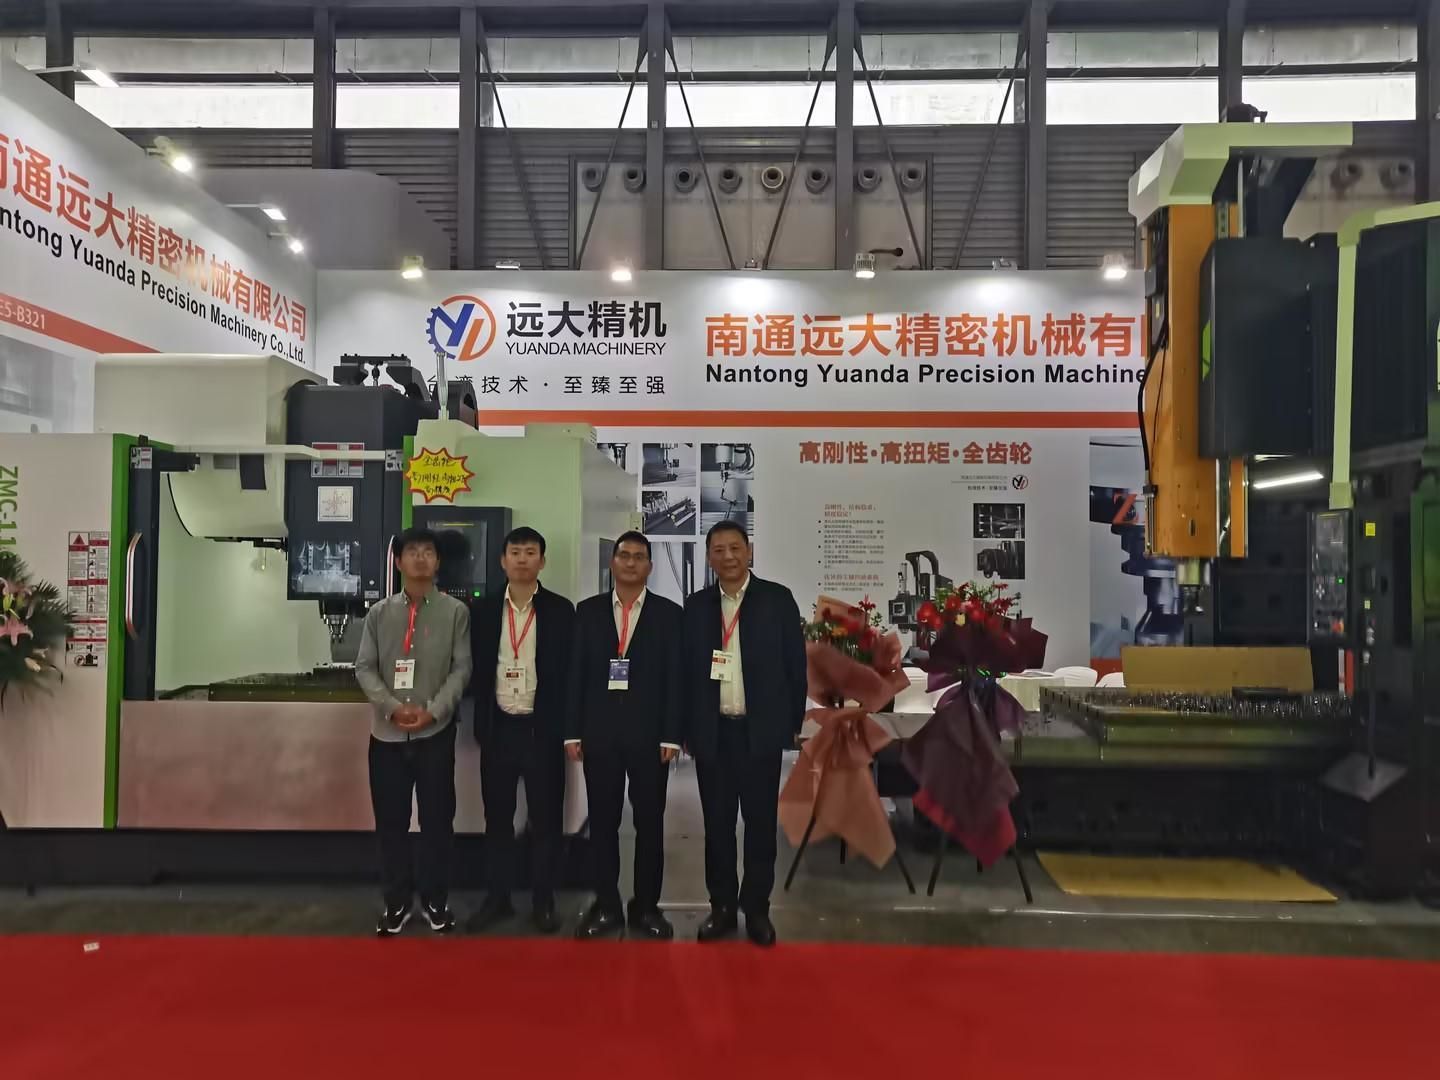 China CNC Machine Tool Exhibition Tour